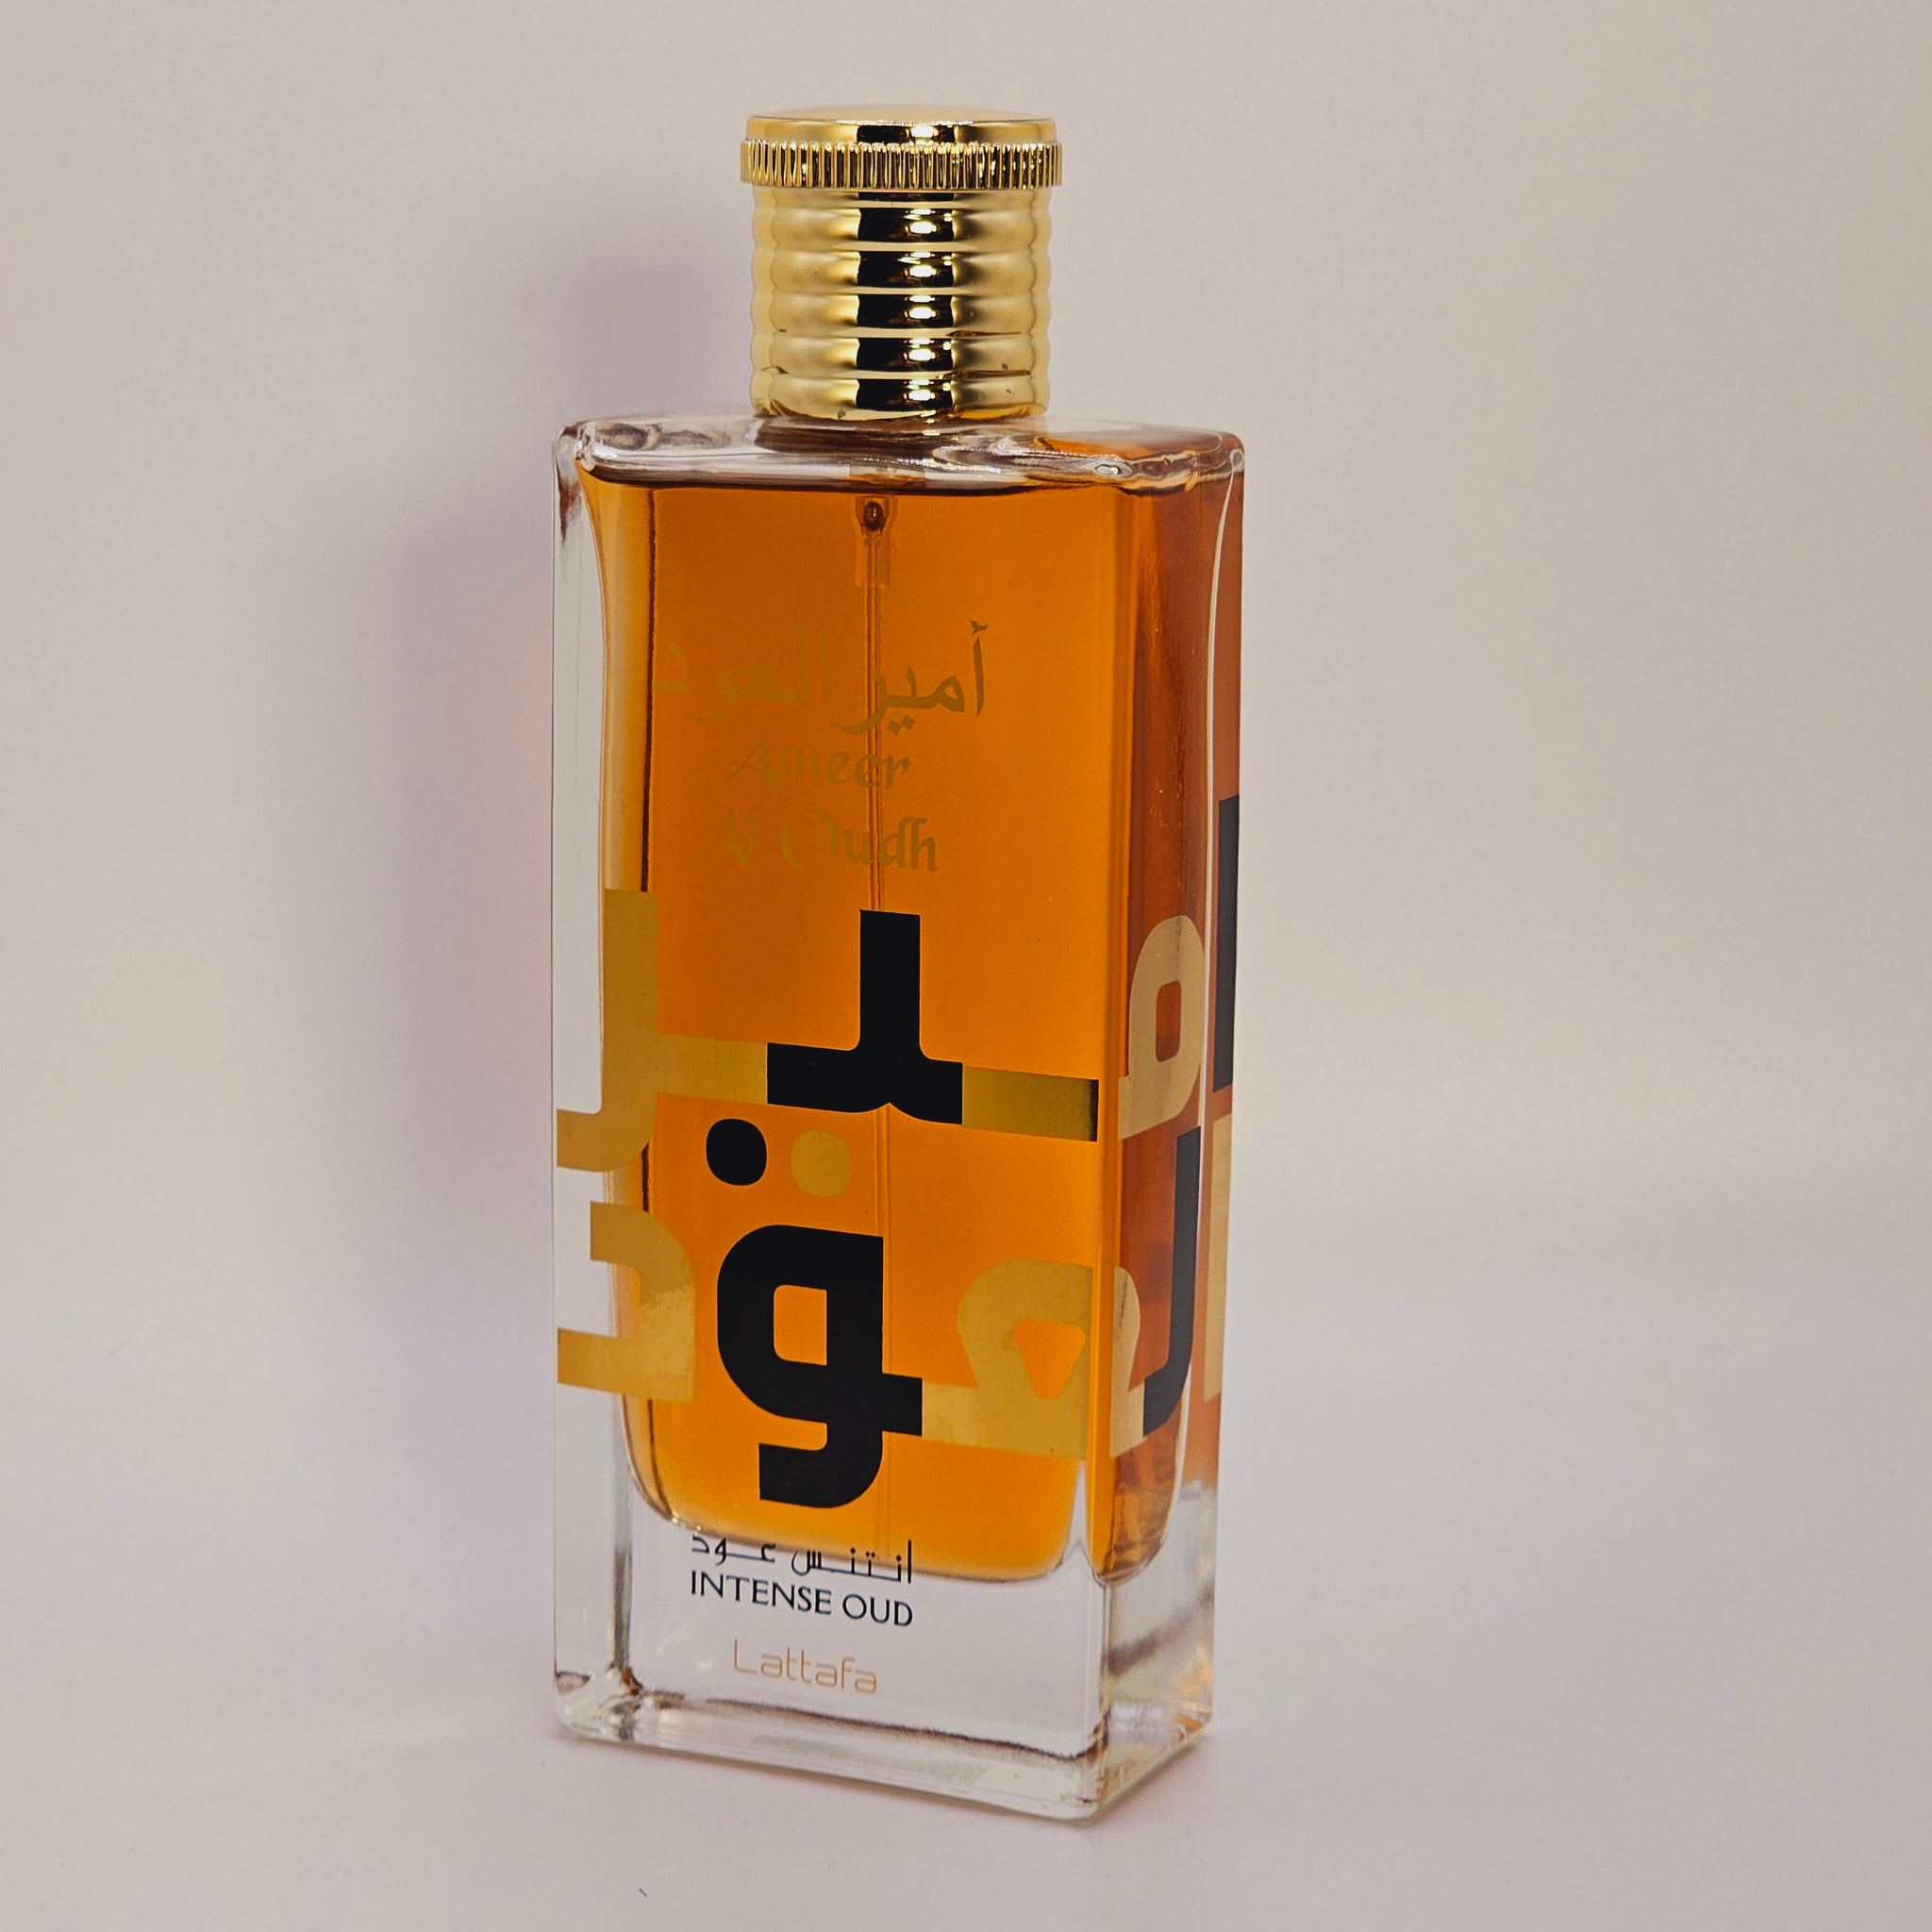 Ameer Al Oudh Intense Oud Eau de Parfum by Lattafa - 3.4 oz Unisex Spray - Premium Oud Fragrance